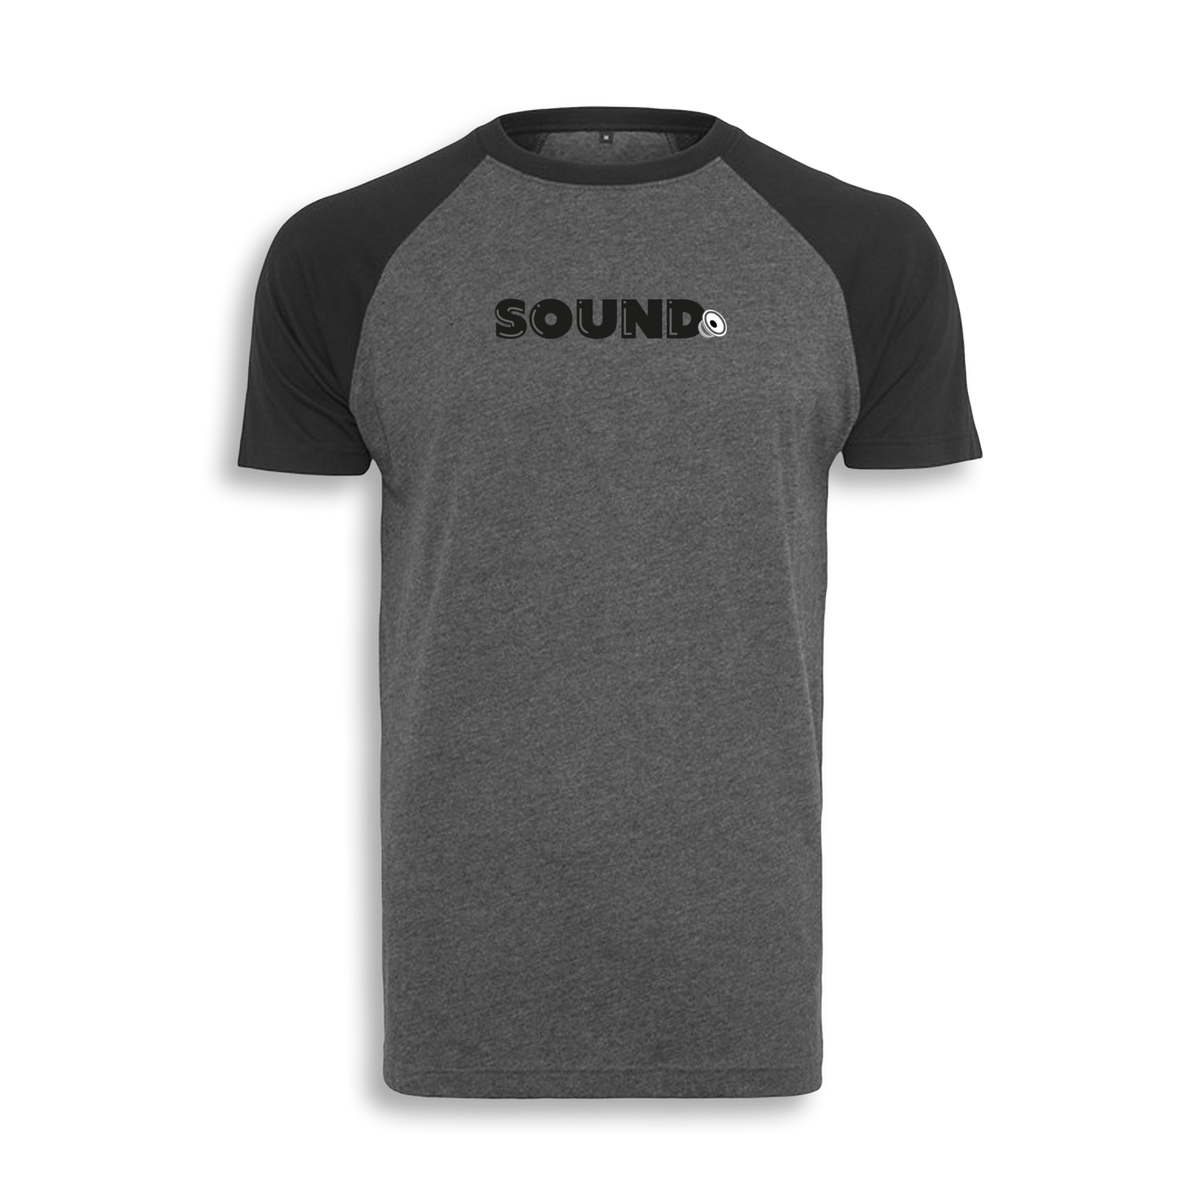 BeeManc Sound T-Shirt - Charcoal/Black